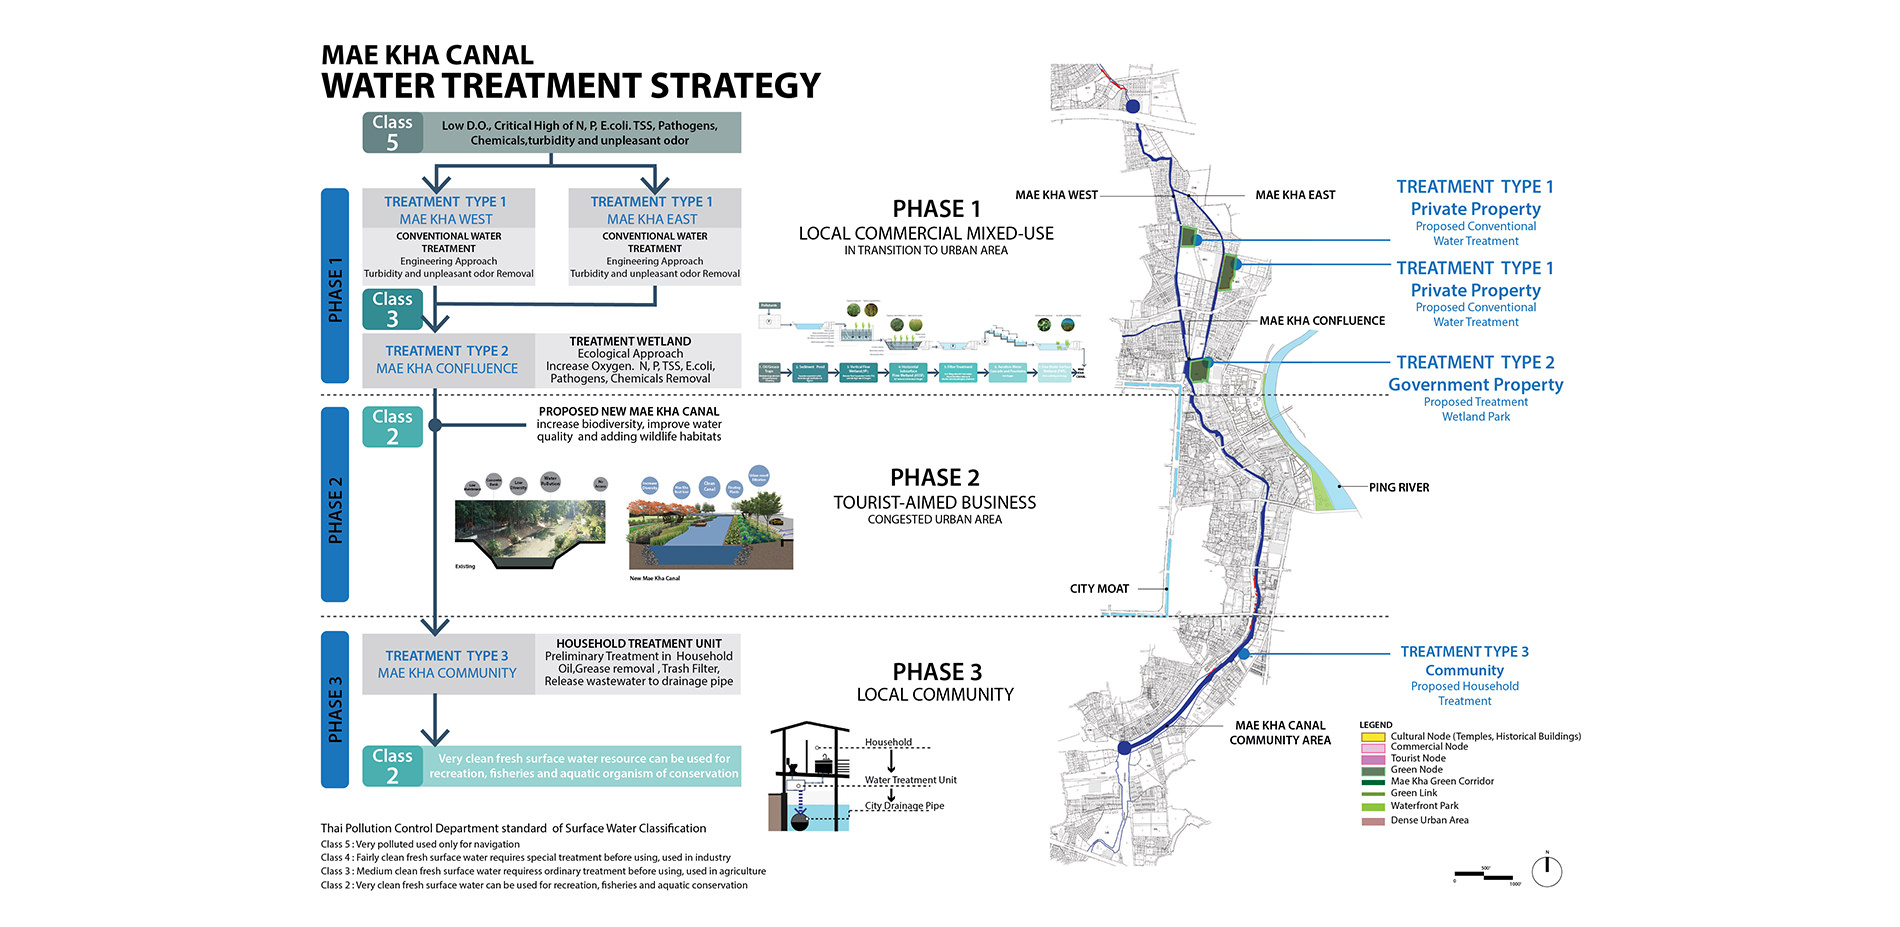 Mae Kha Canal water treatment strategy